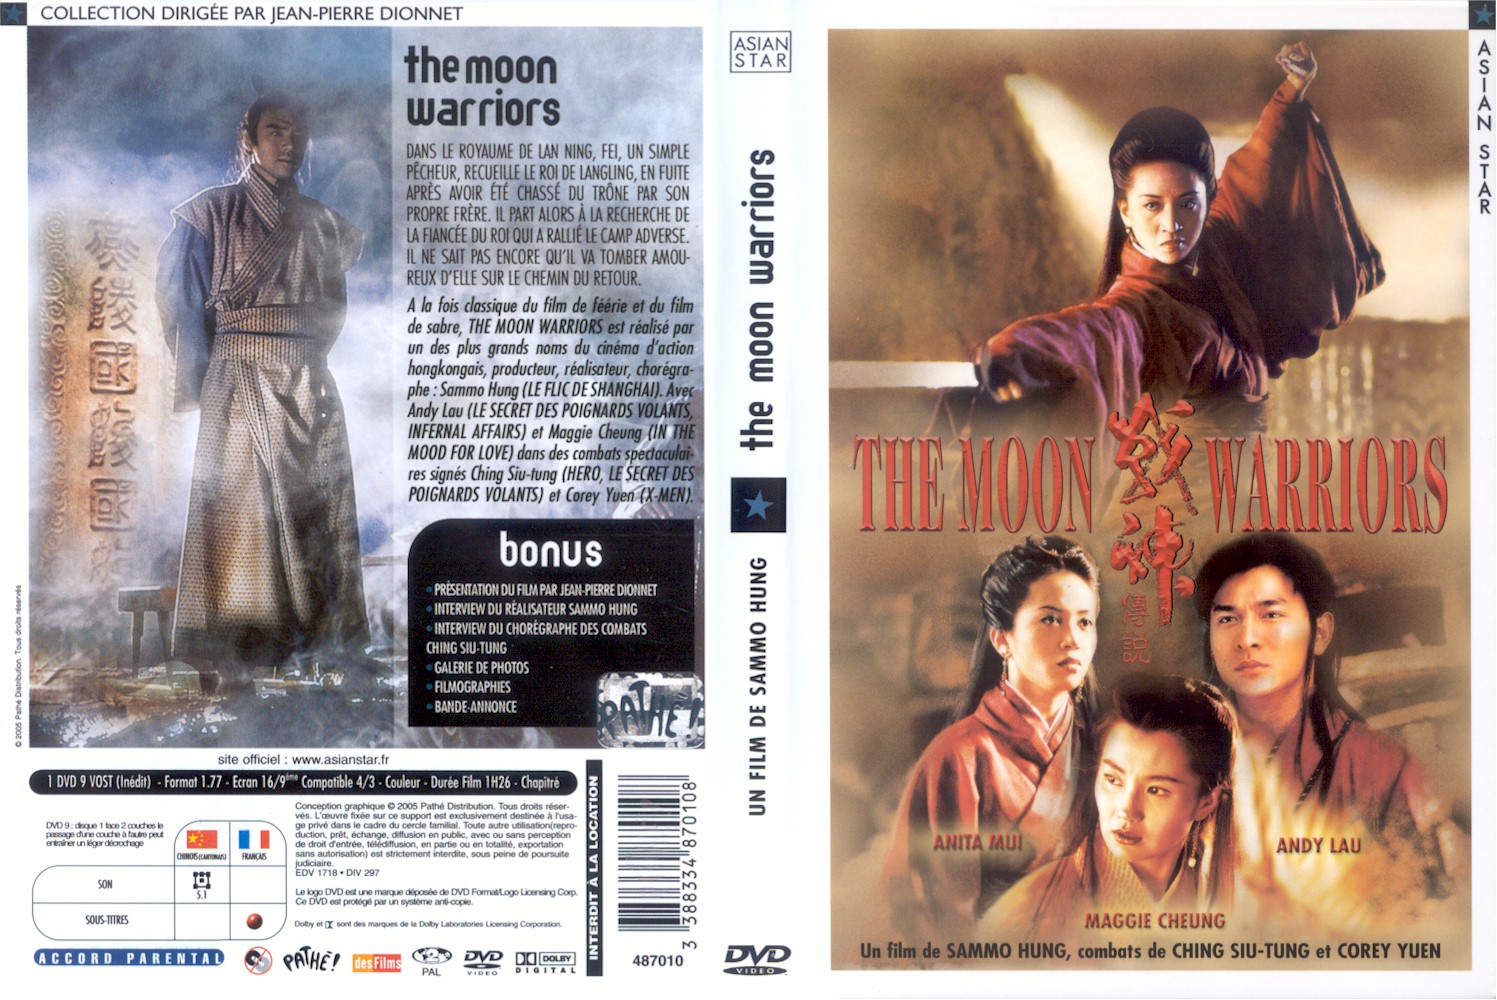 Jaquette DVD The moon warriors